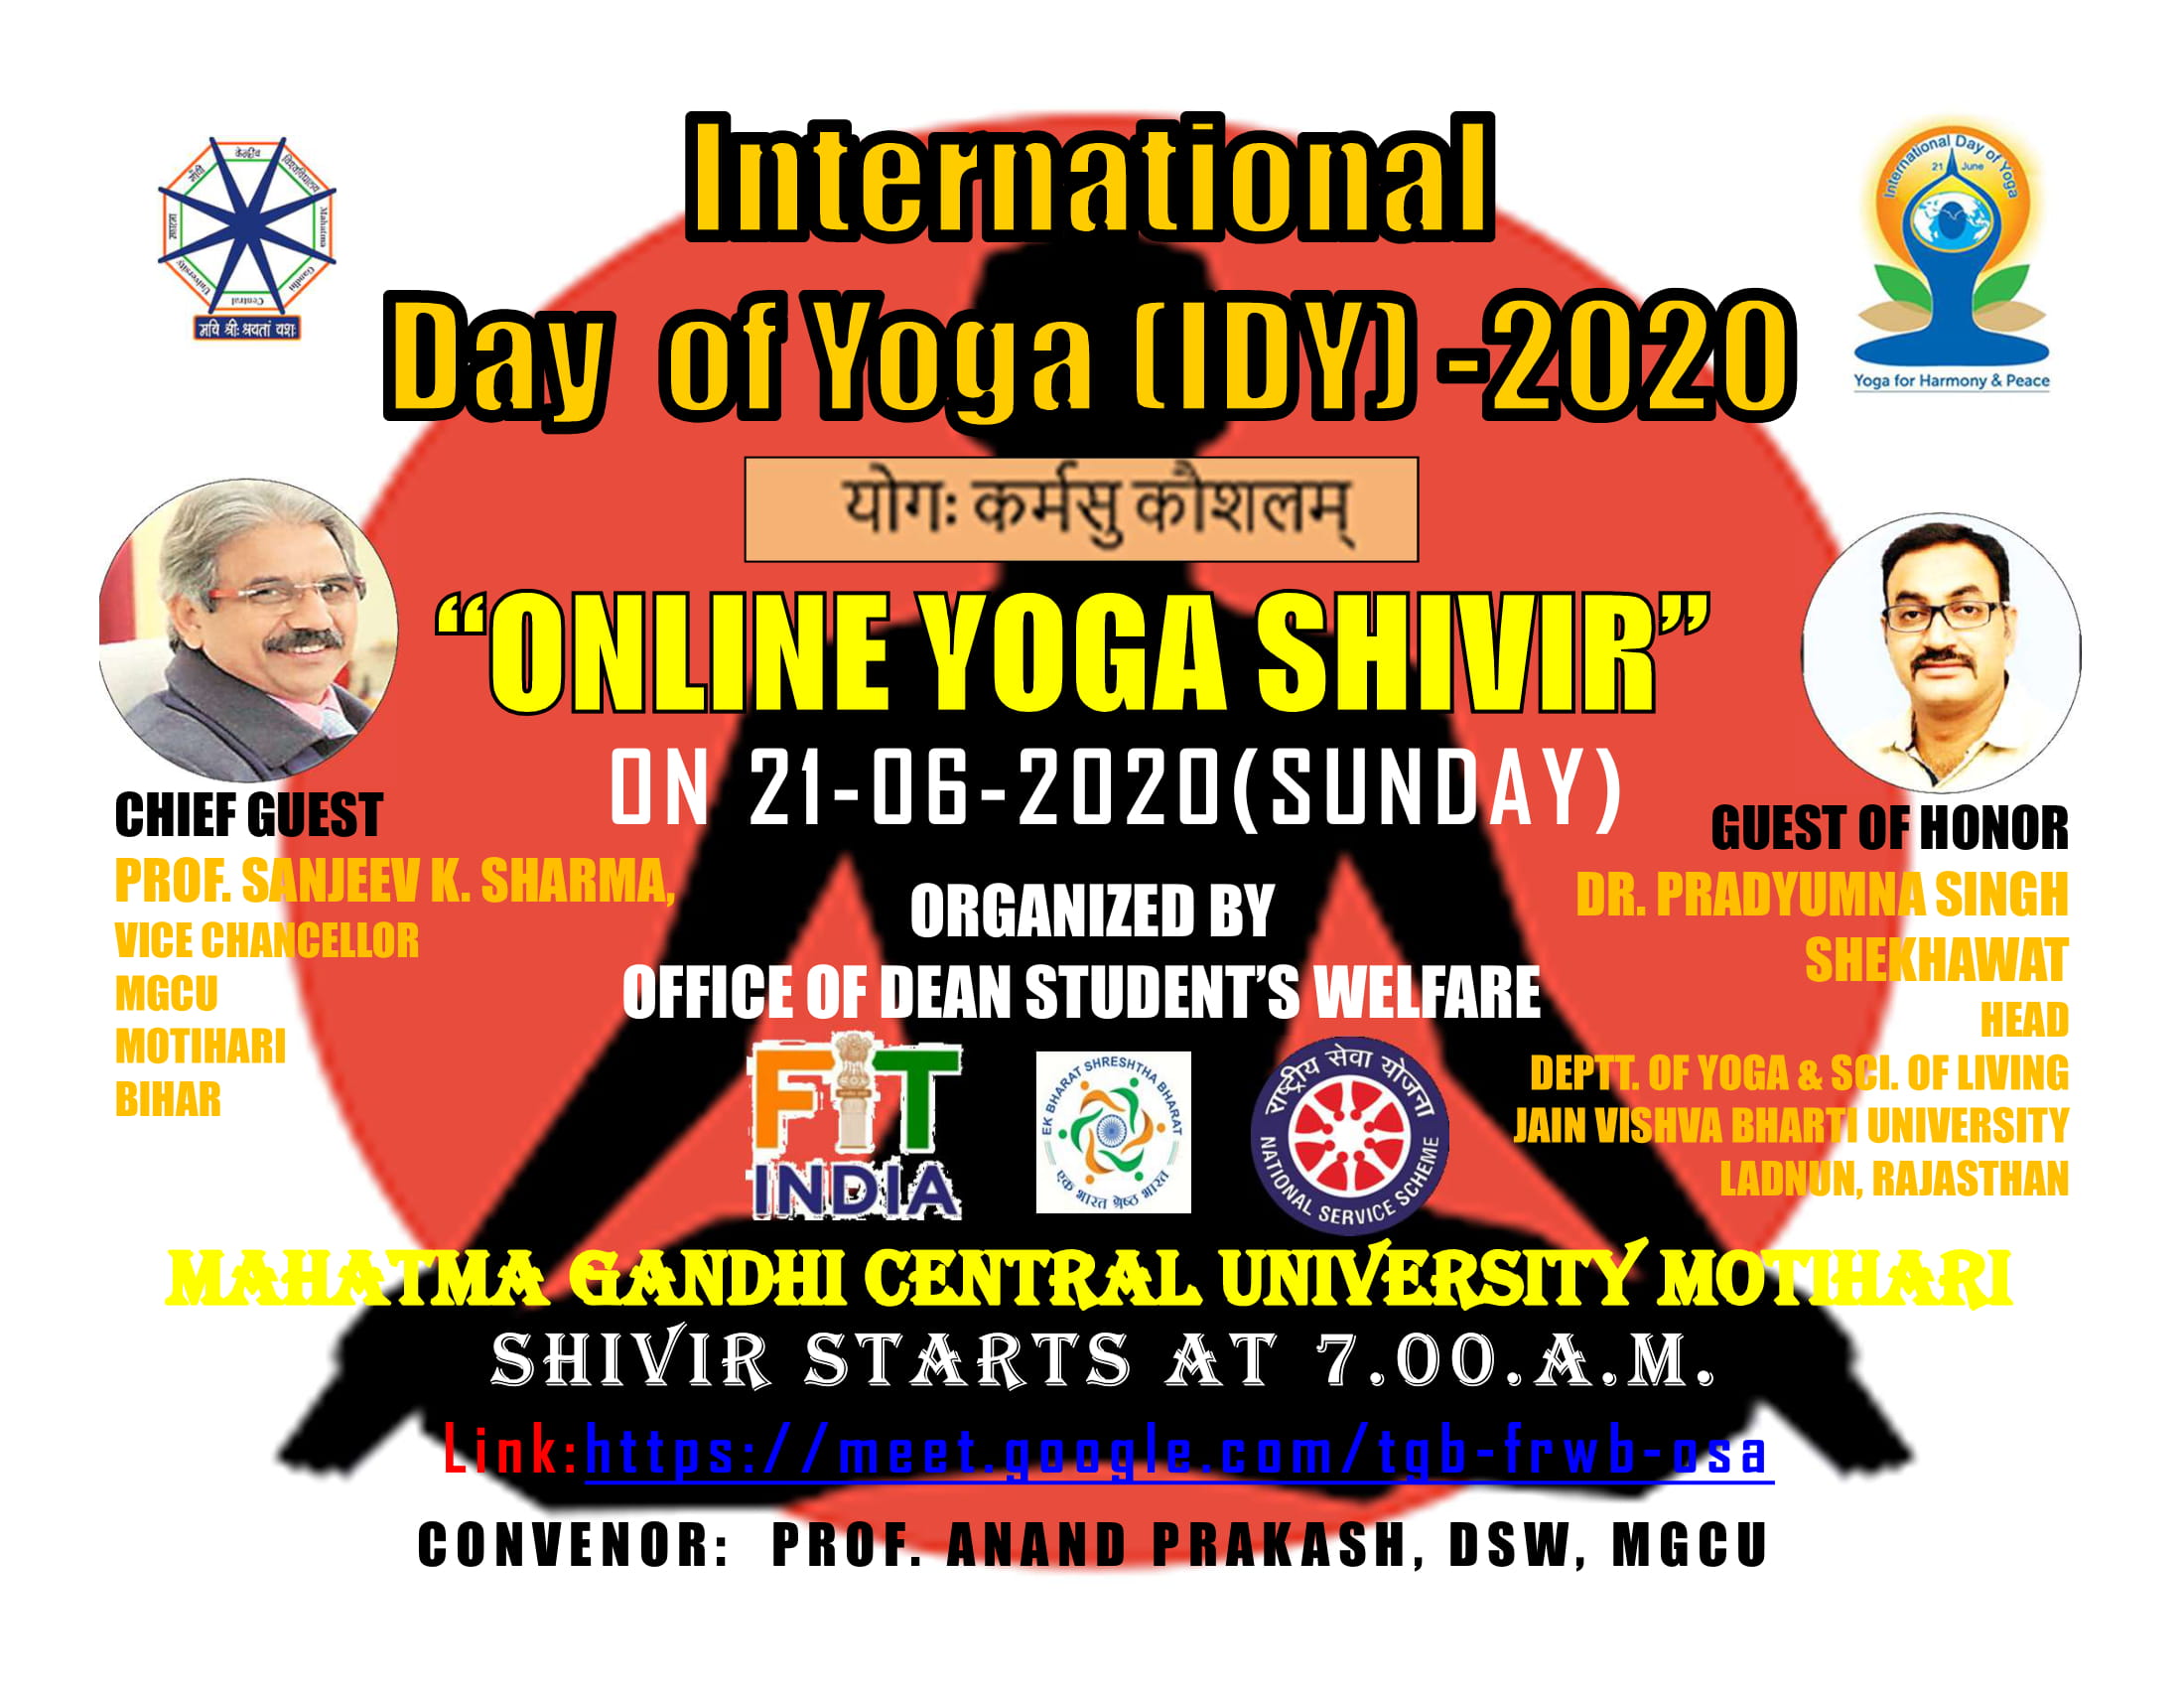 Online Yoga Shivir on International Day of Yoga (IDY)-2020